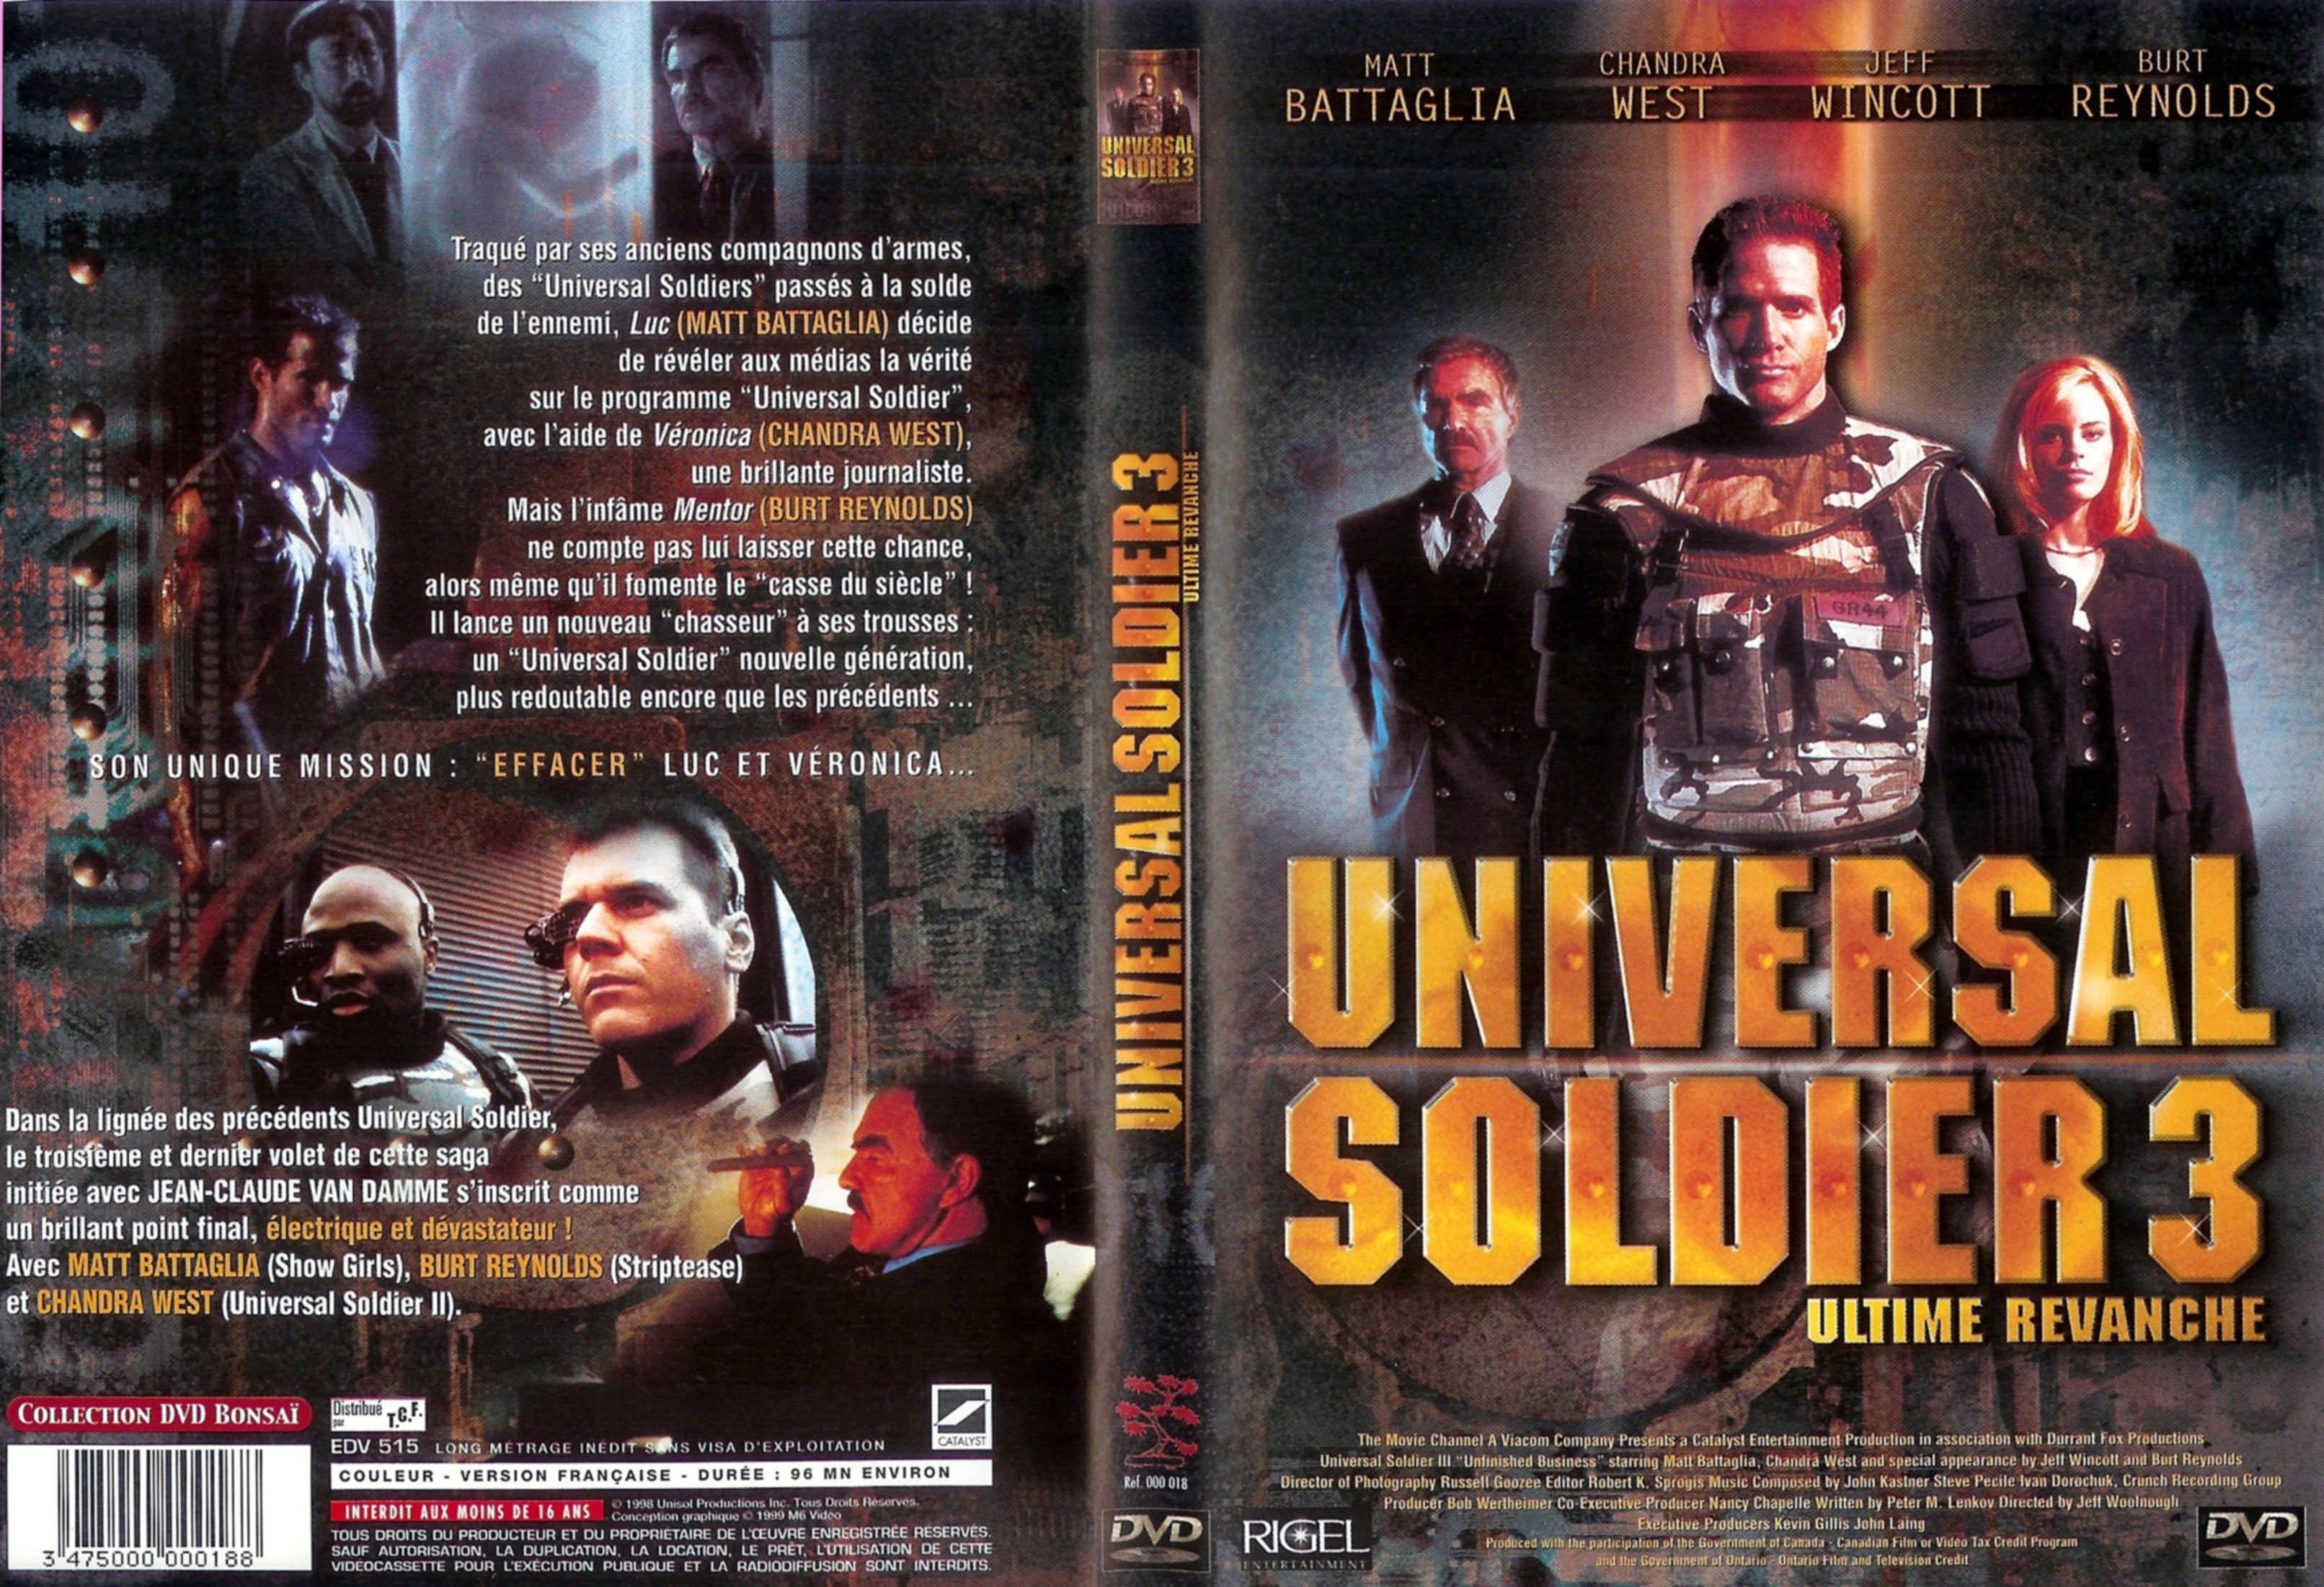 Jaquette DVD Universal soldier 3